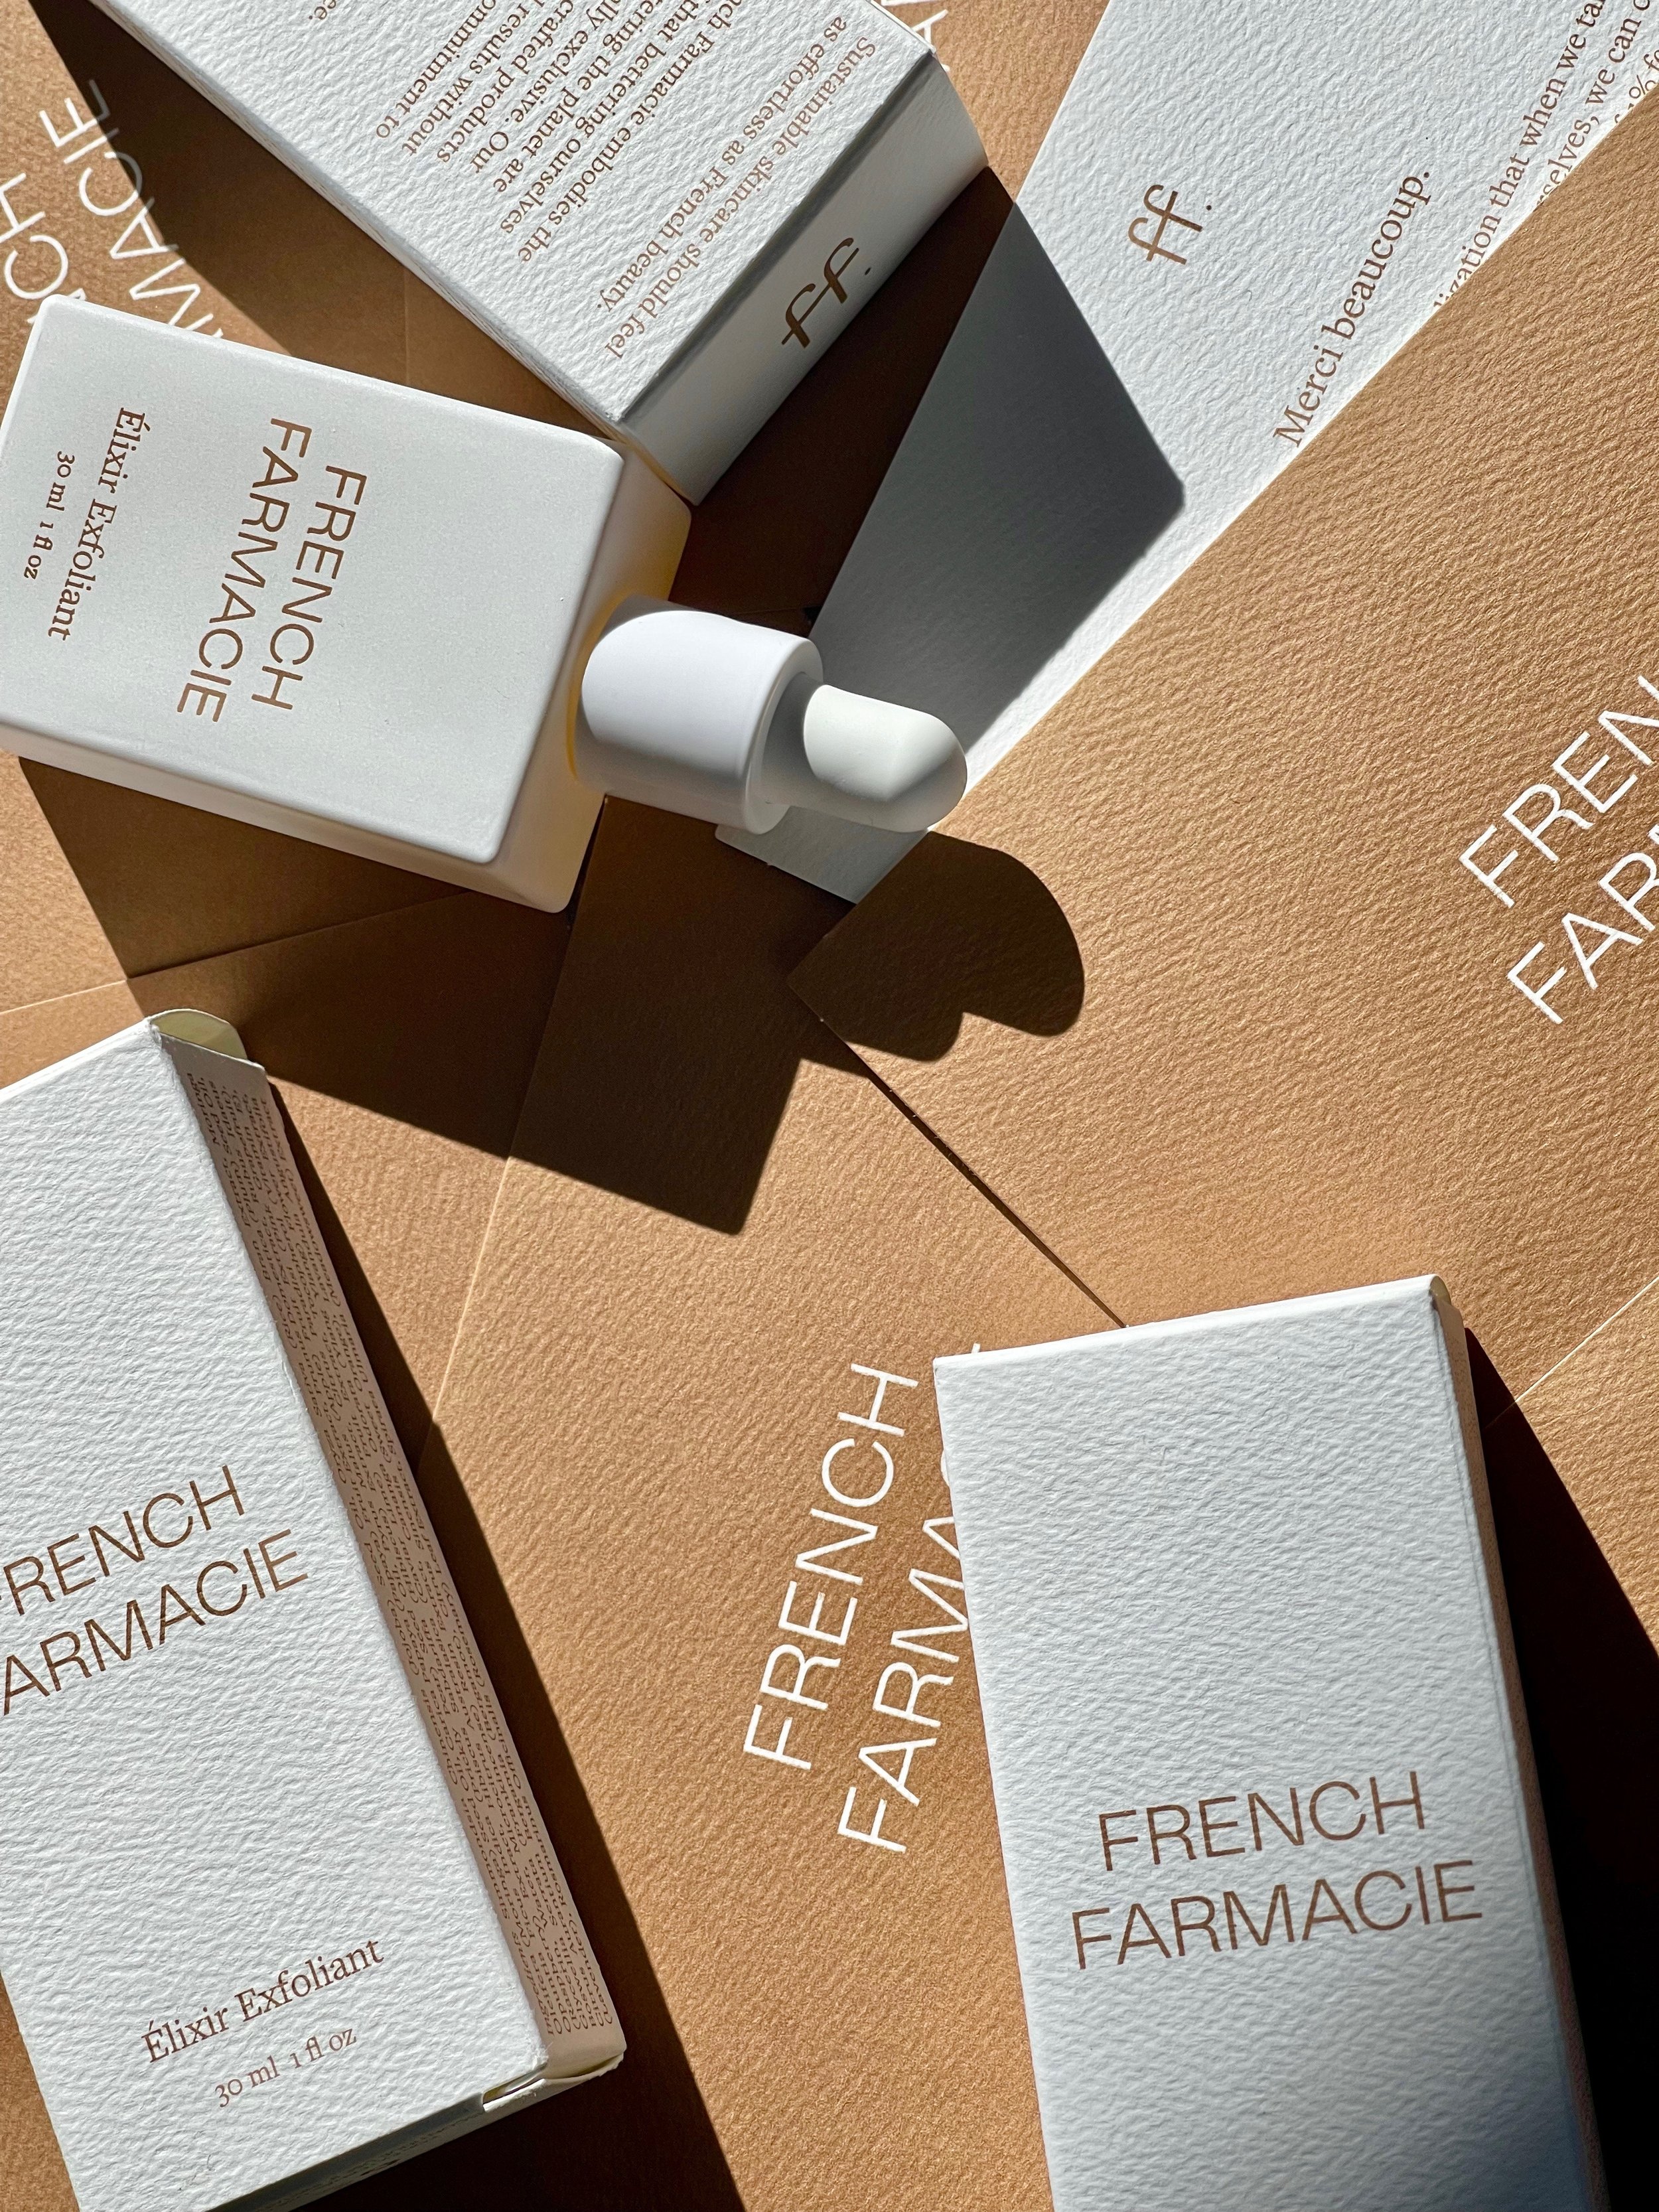 FF tan&white packaging.jpg